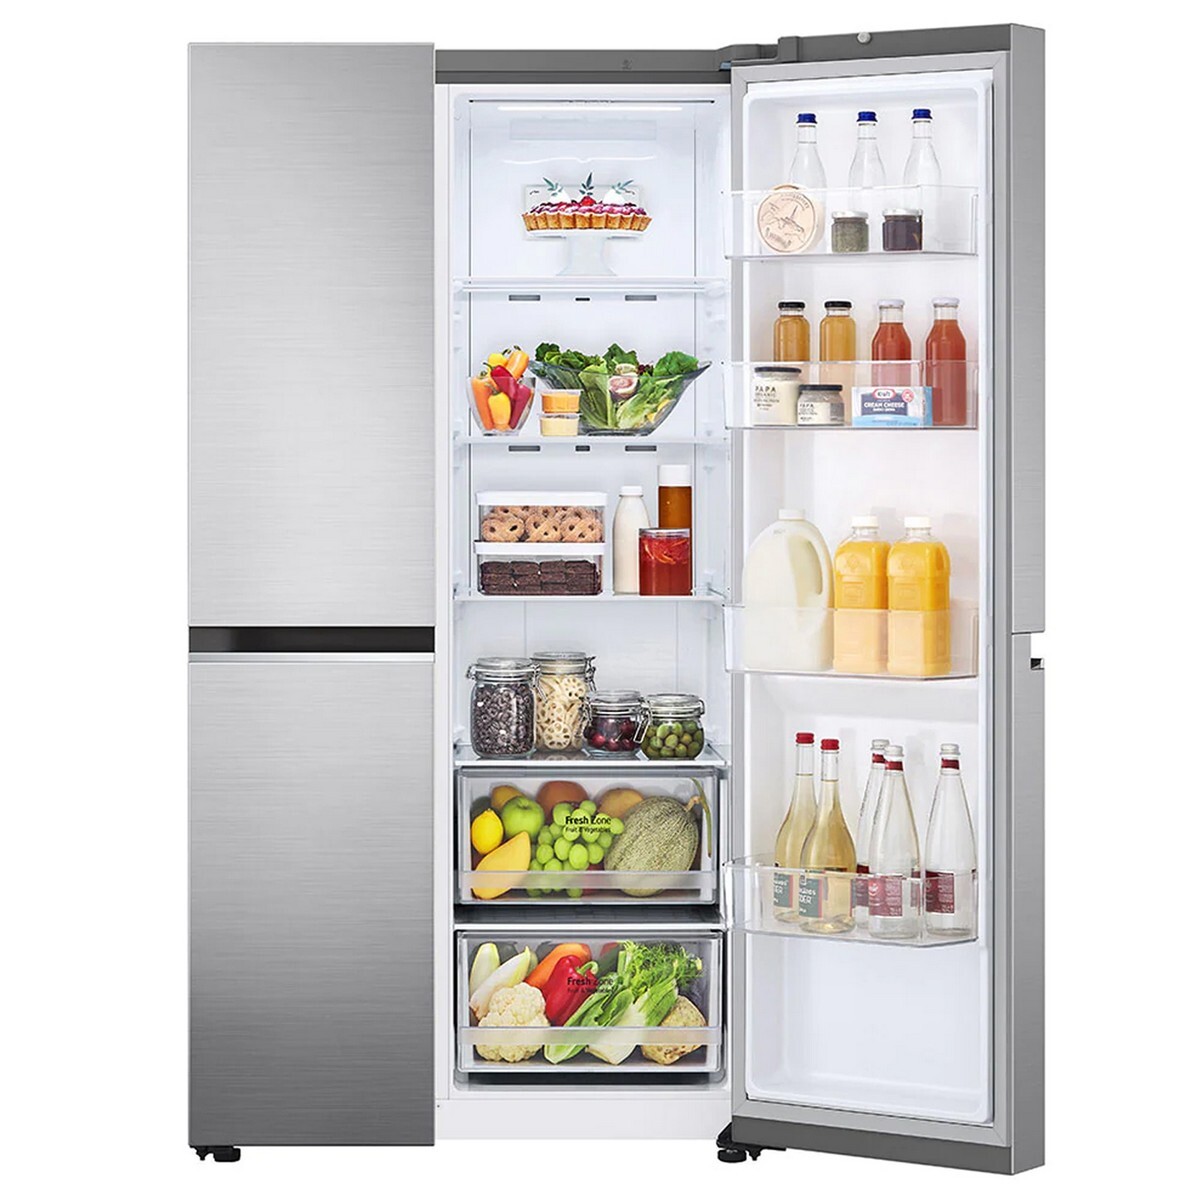 LG Side by Side Refrigerator GC-B257SLUV.APZQEBN 694 Ltr